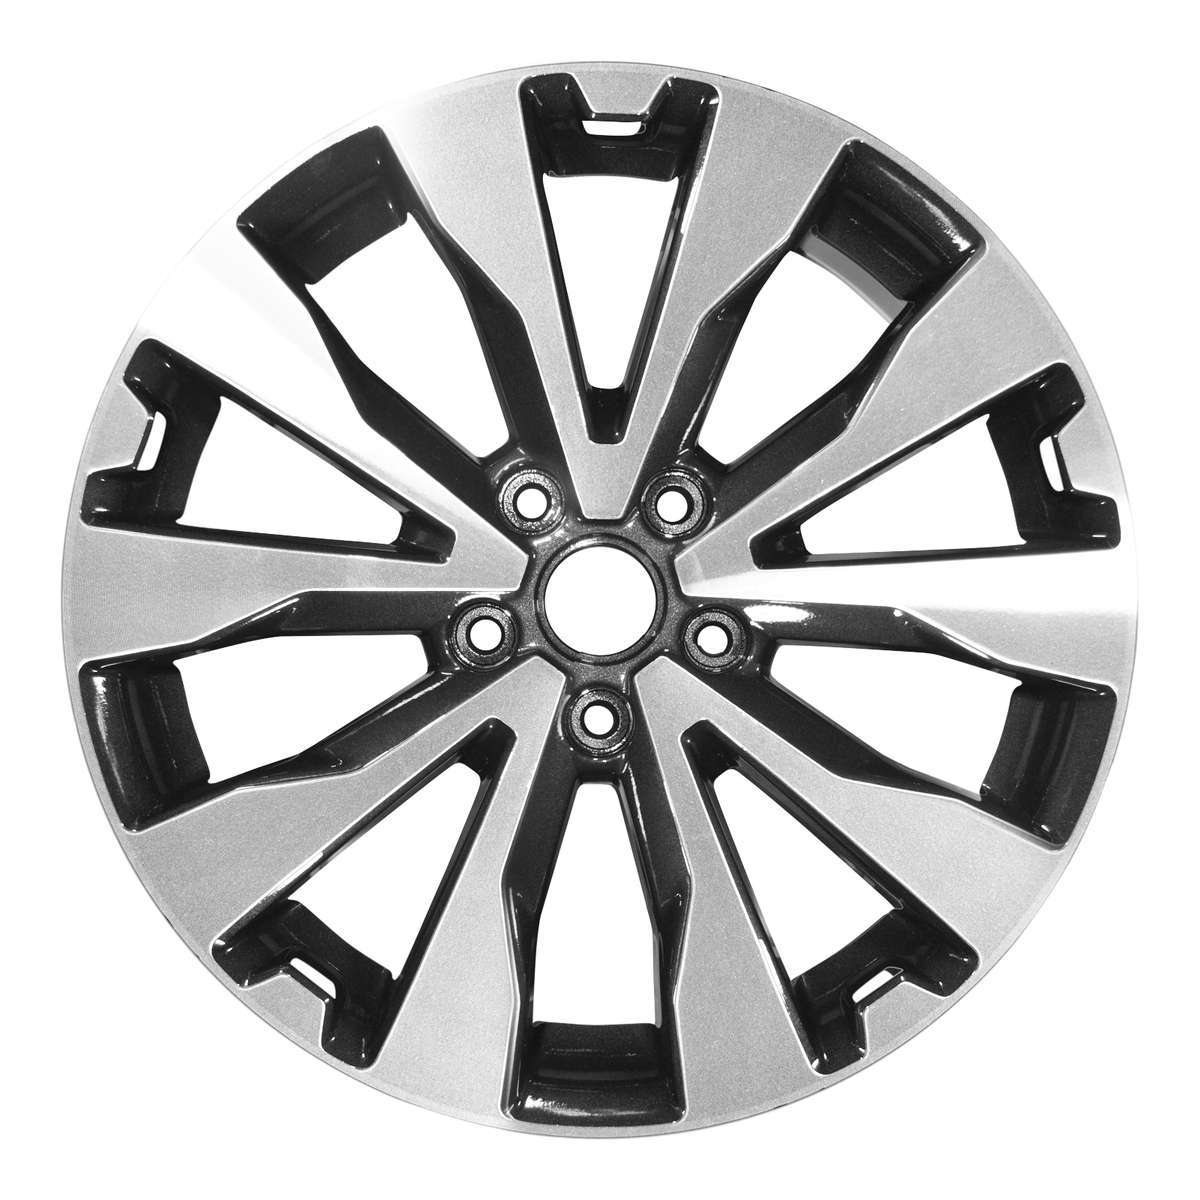 2015 Subaru Outback New 18" Replacement Wheel Rim RW68826MC